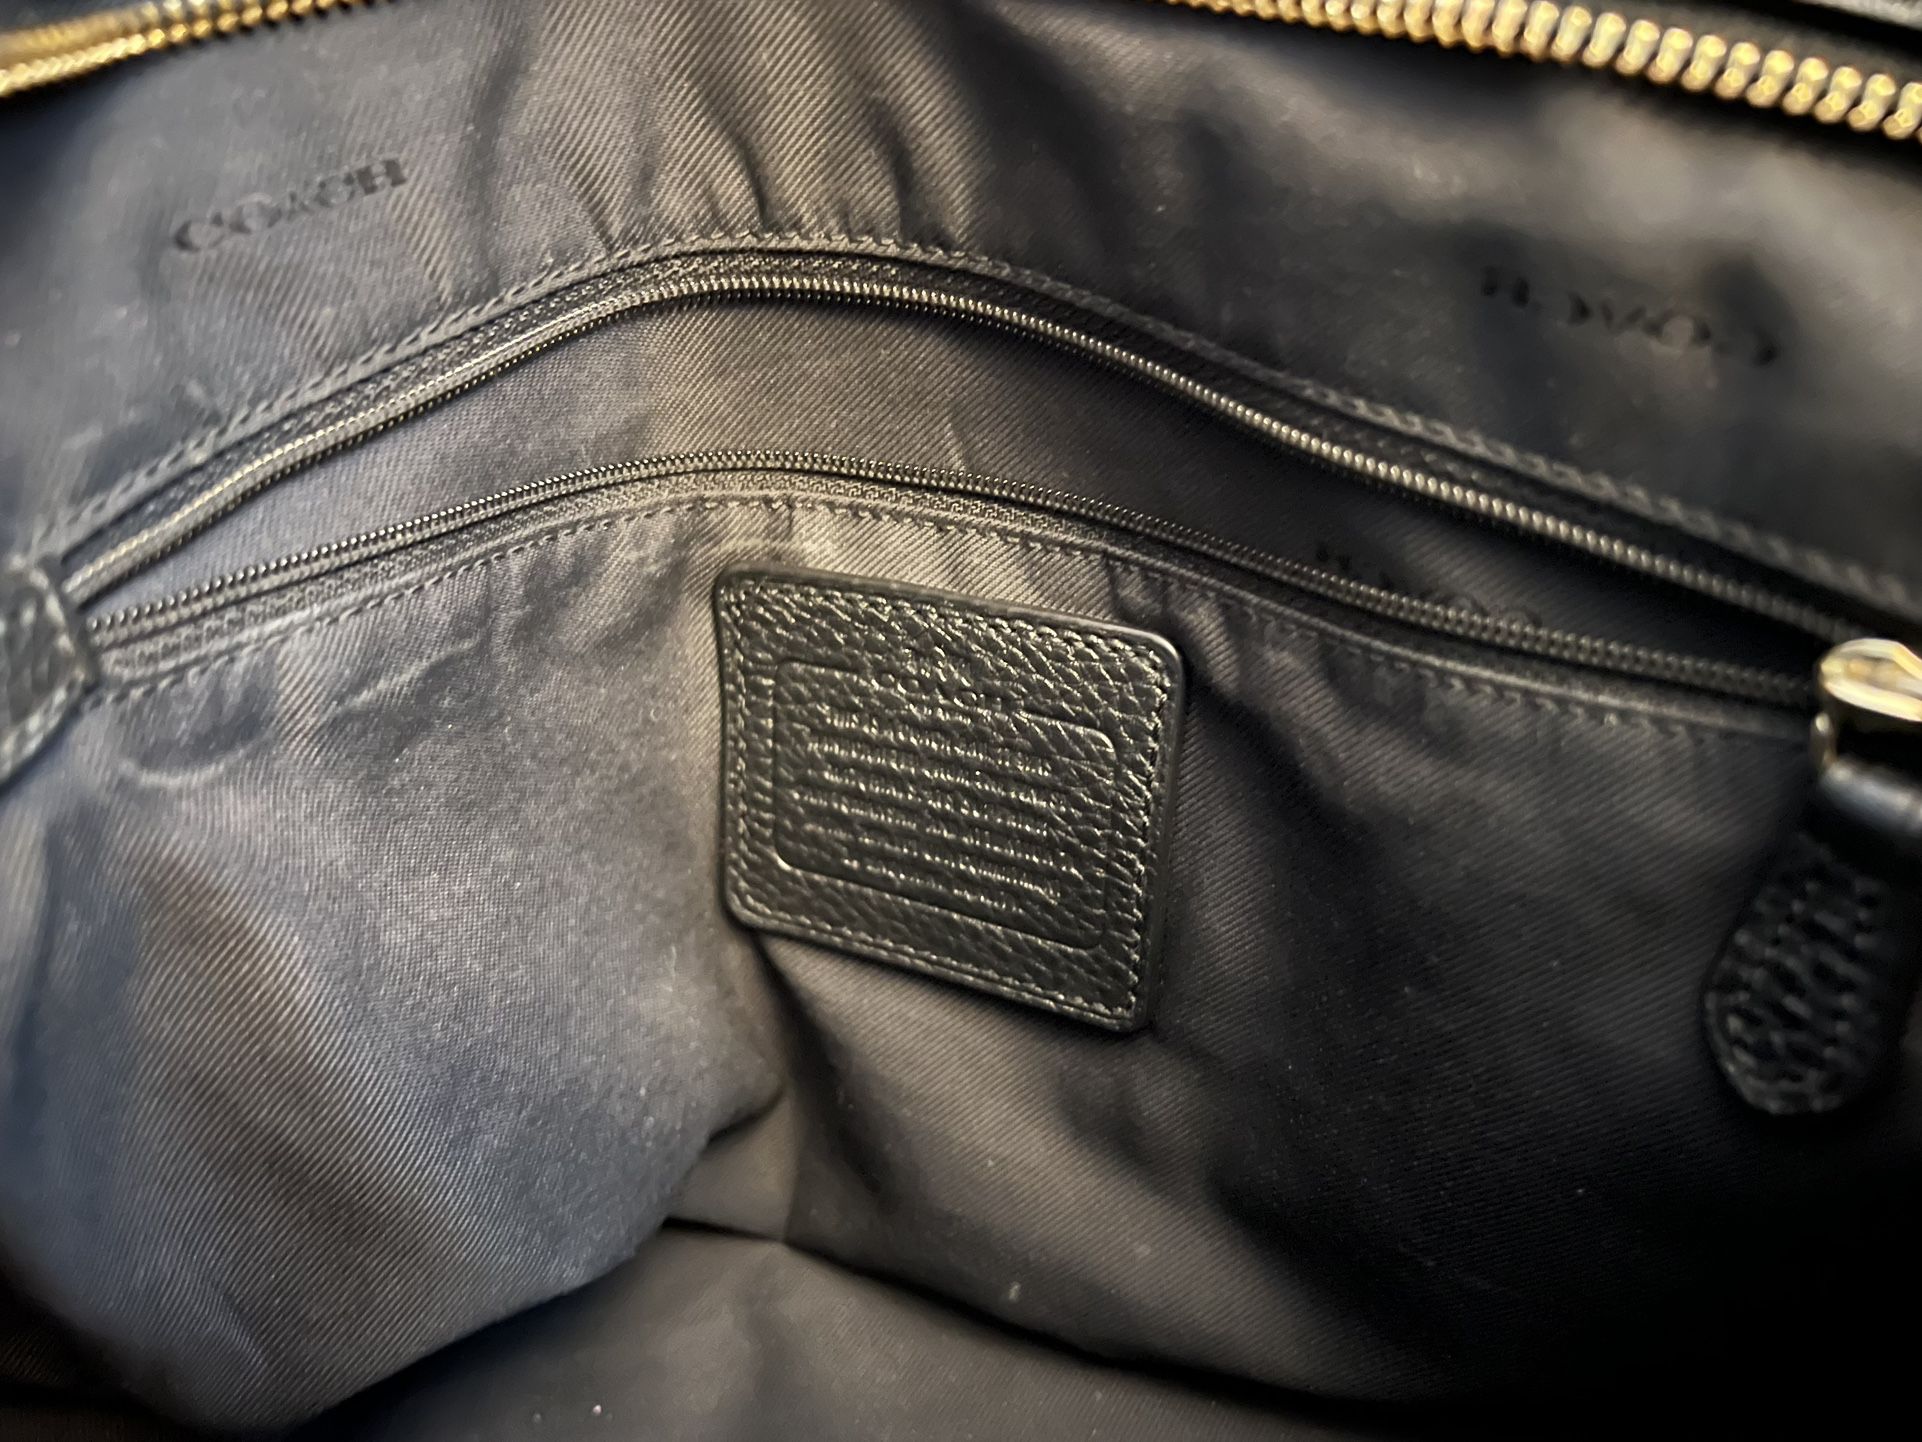 New W/tags Authentic Coach Katy Satchel Handbag Rare Sedona Color for Sale  in South Setauket, NY - OfferUp